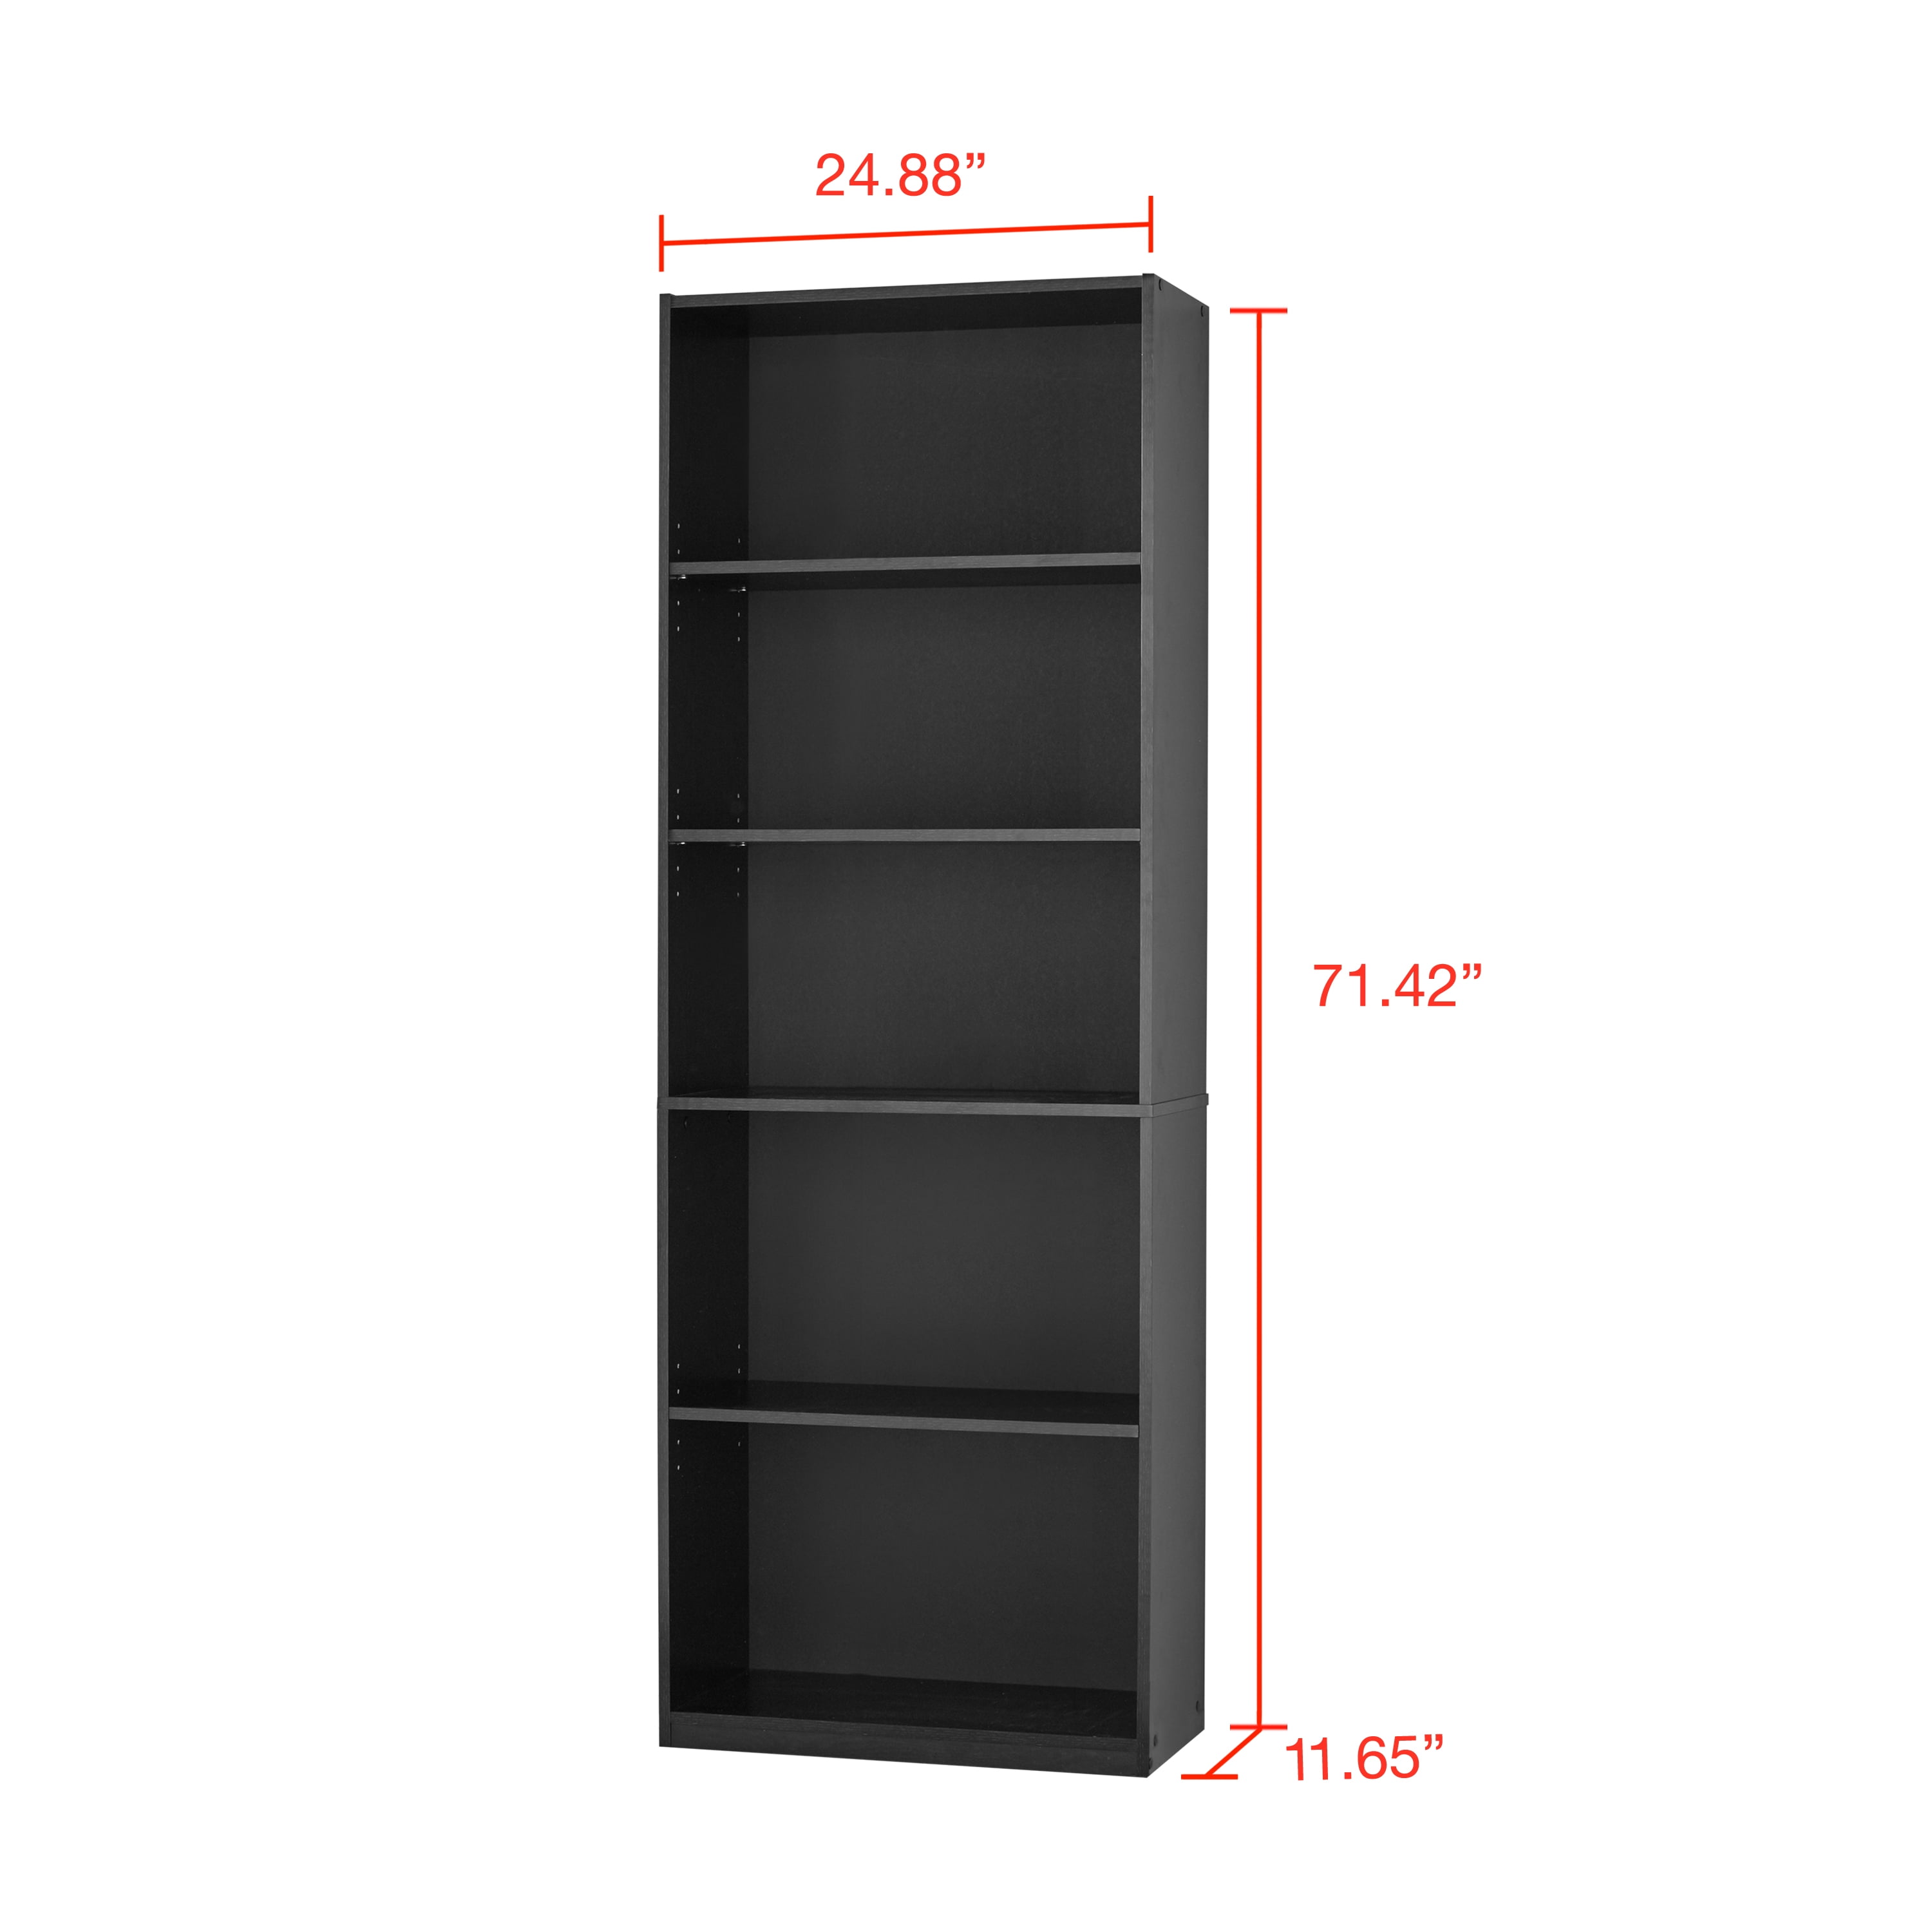 Details about   Bookcase 9-Shelves Bookshelf DIY Home Office Storage Furniture Display USA h 05